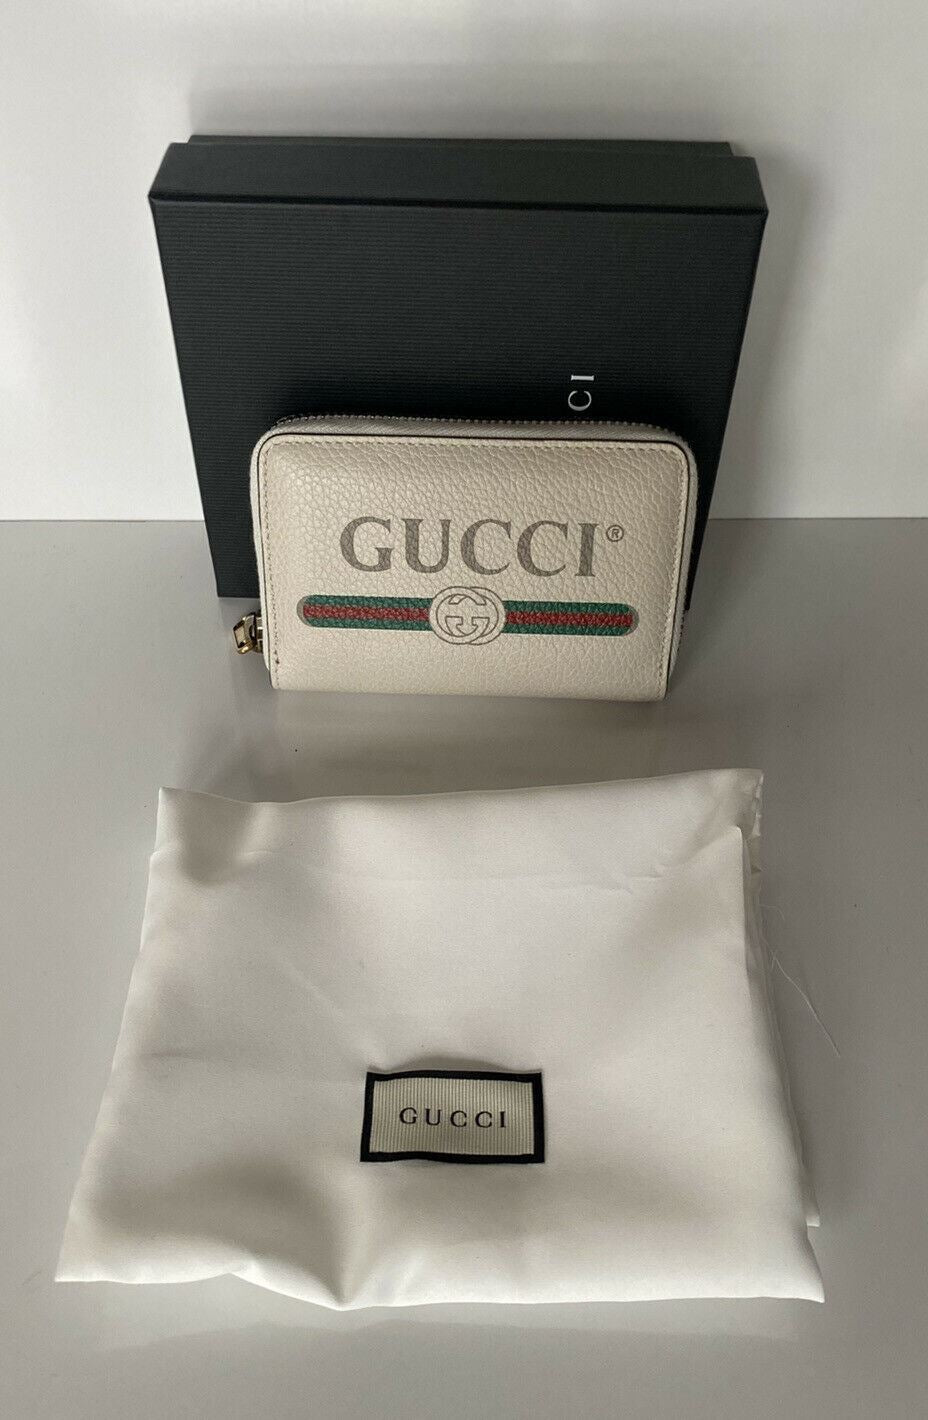 NWT Gucci G Web Gucci Кошелек для карточек на молнии по кругу цвета слоновой кости, производство Италия 496319 